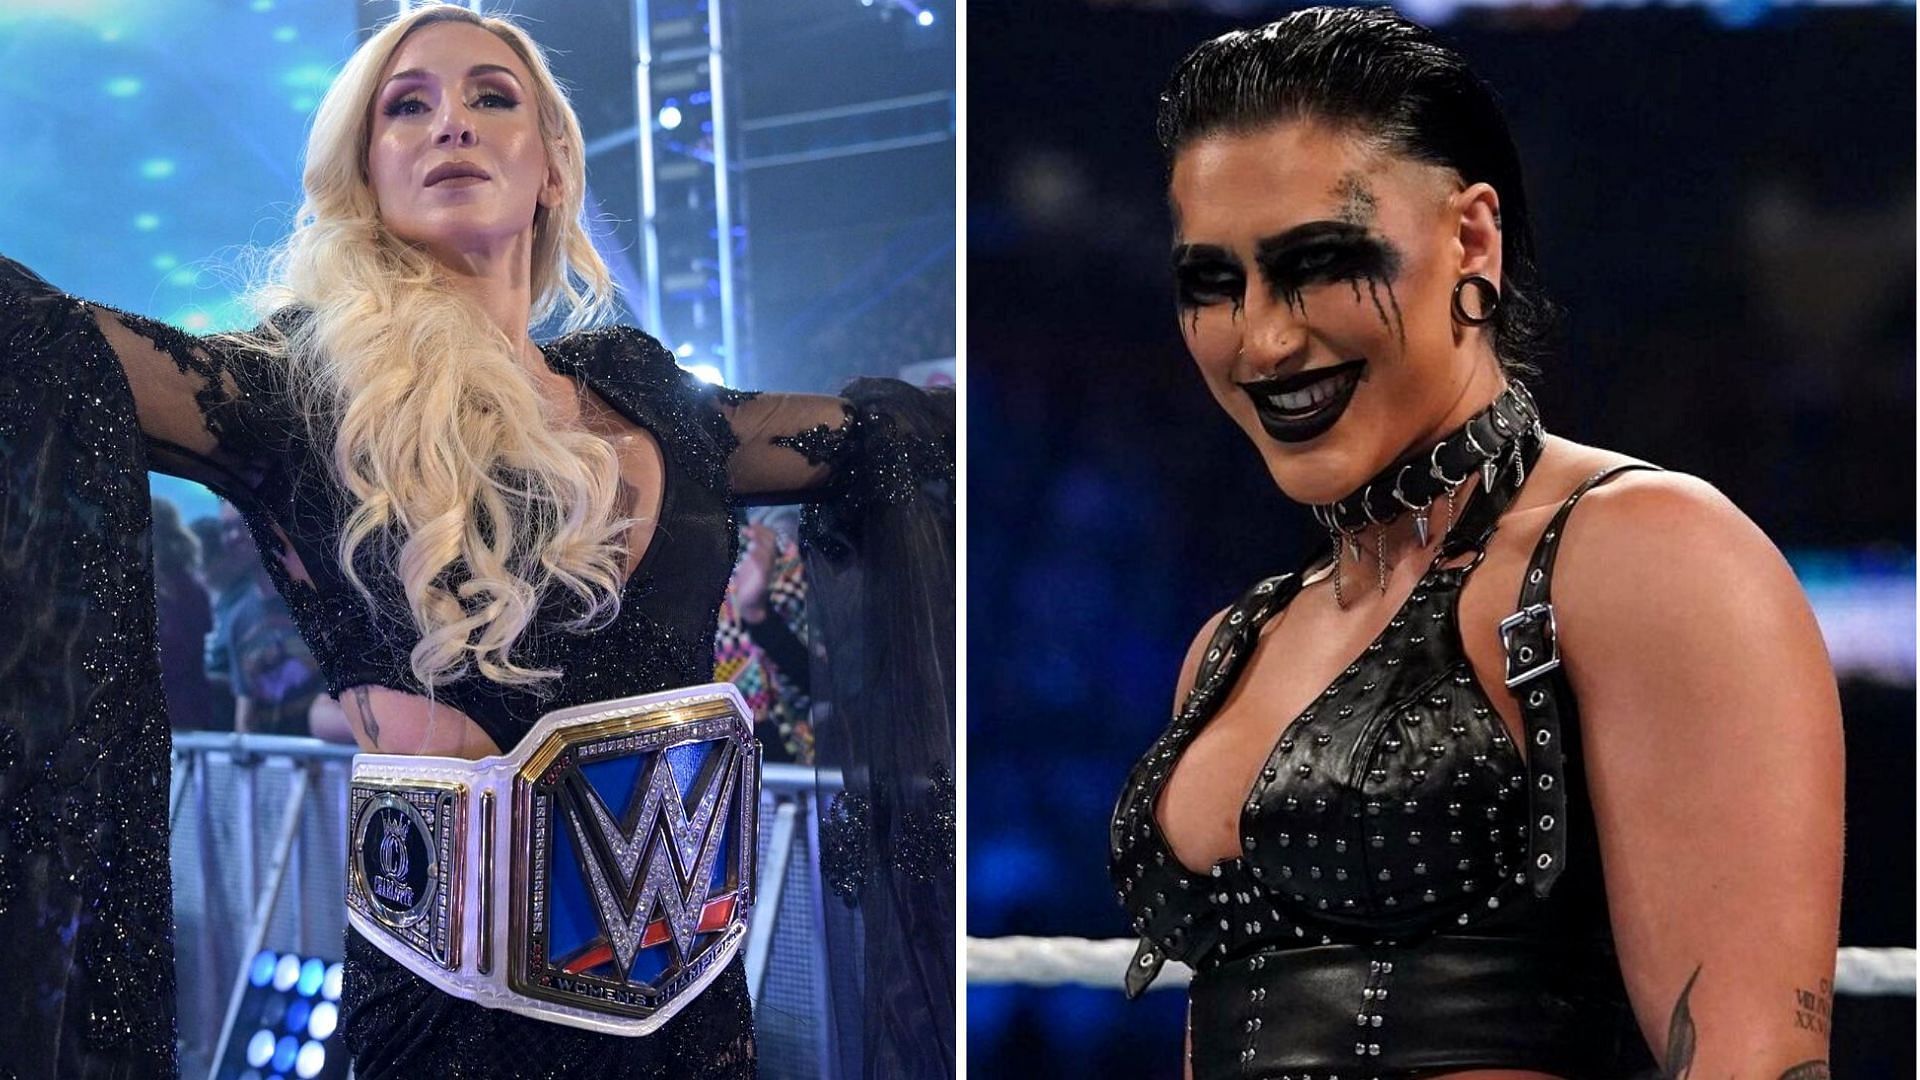 Charlotte Flair and Rhea Ripley will headline WrestleMania 39